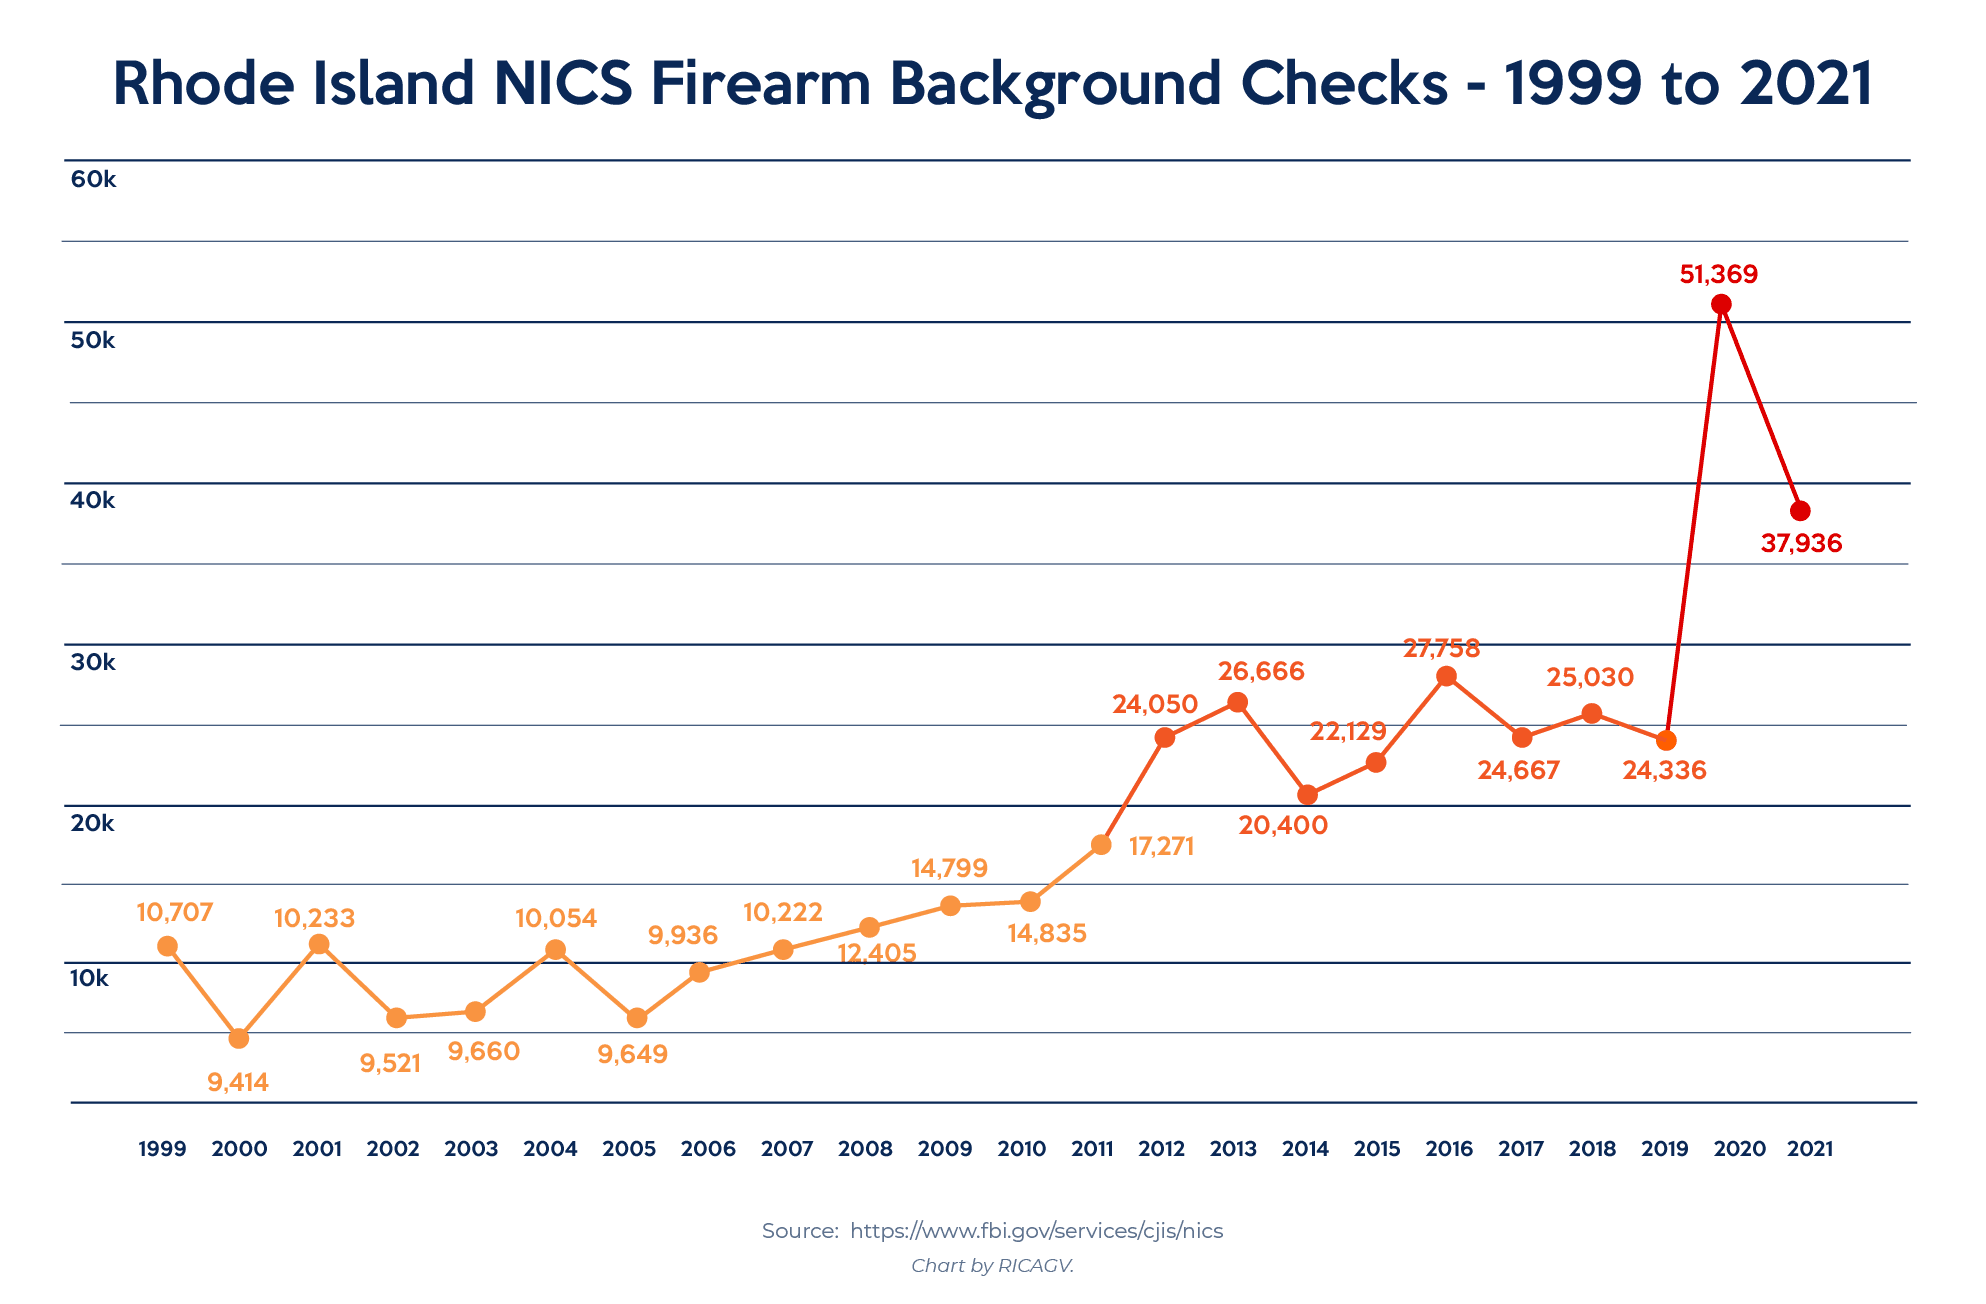 NICS Background checks - Rhode Island 1999-2020